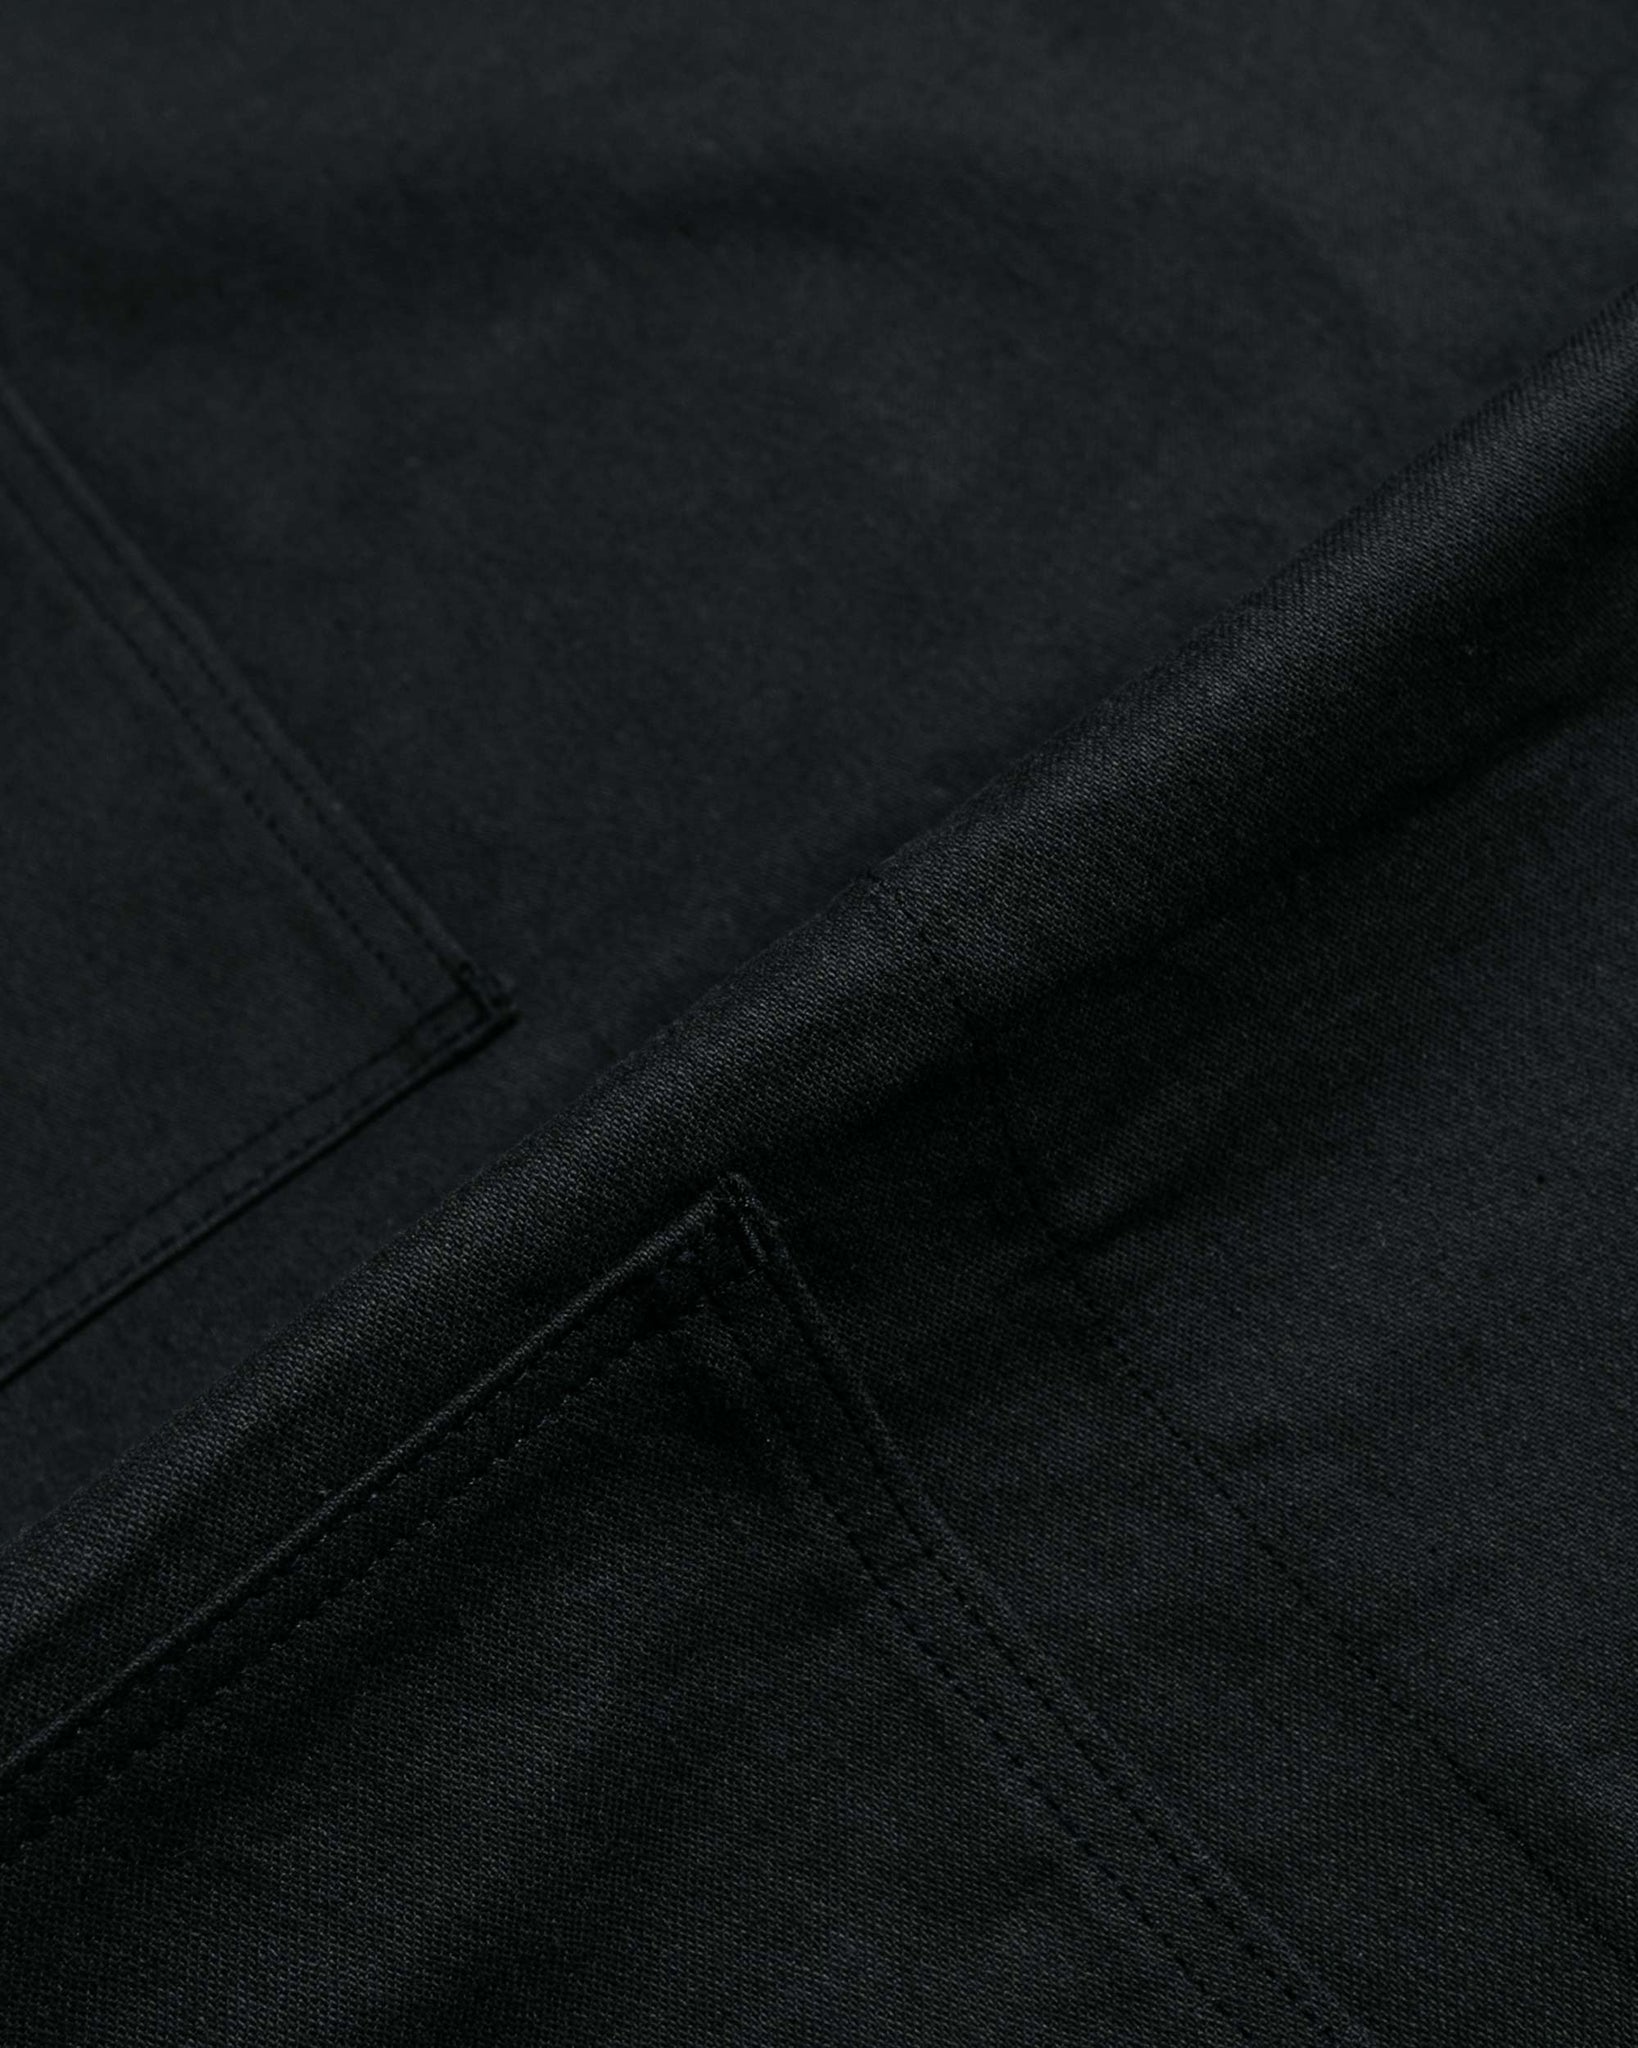 Engineered Garments Workaday Shawl Collar Jacket Black Cotton Reverse Sateen fabric